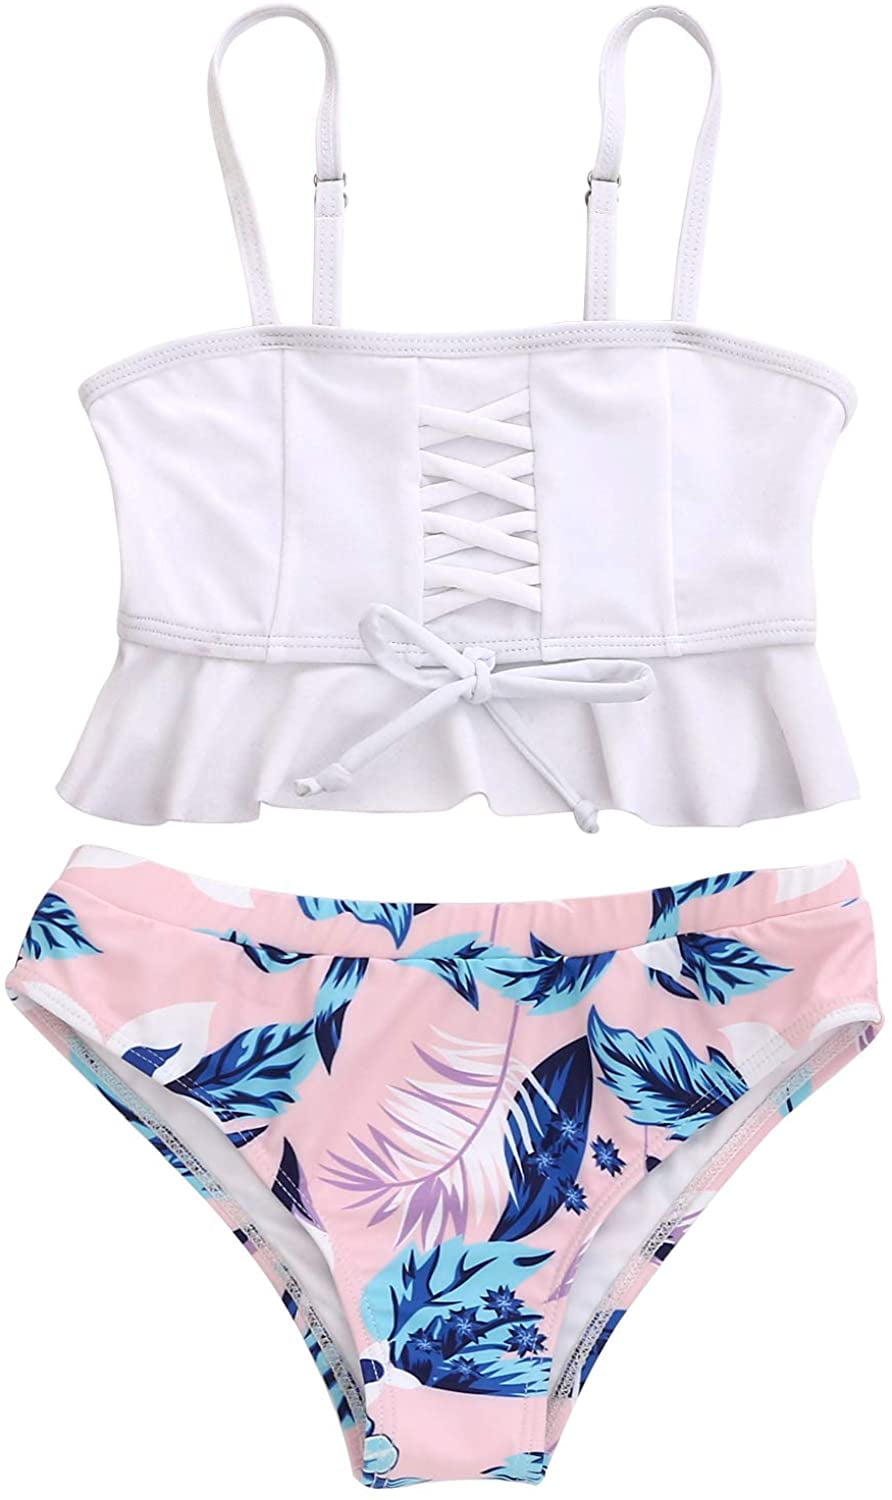 Baby Girls Ruffles Bikini,Hollow Ruffle Two Piece Bikini Set Summer Vacation Swimsuit Clothes Mix